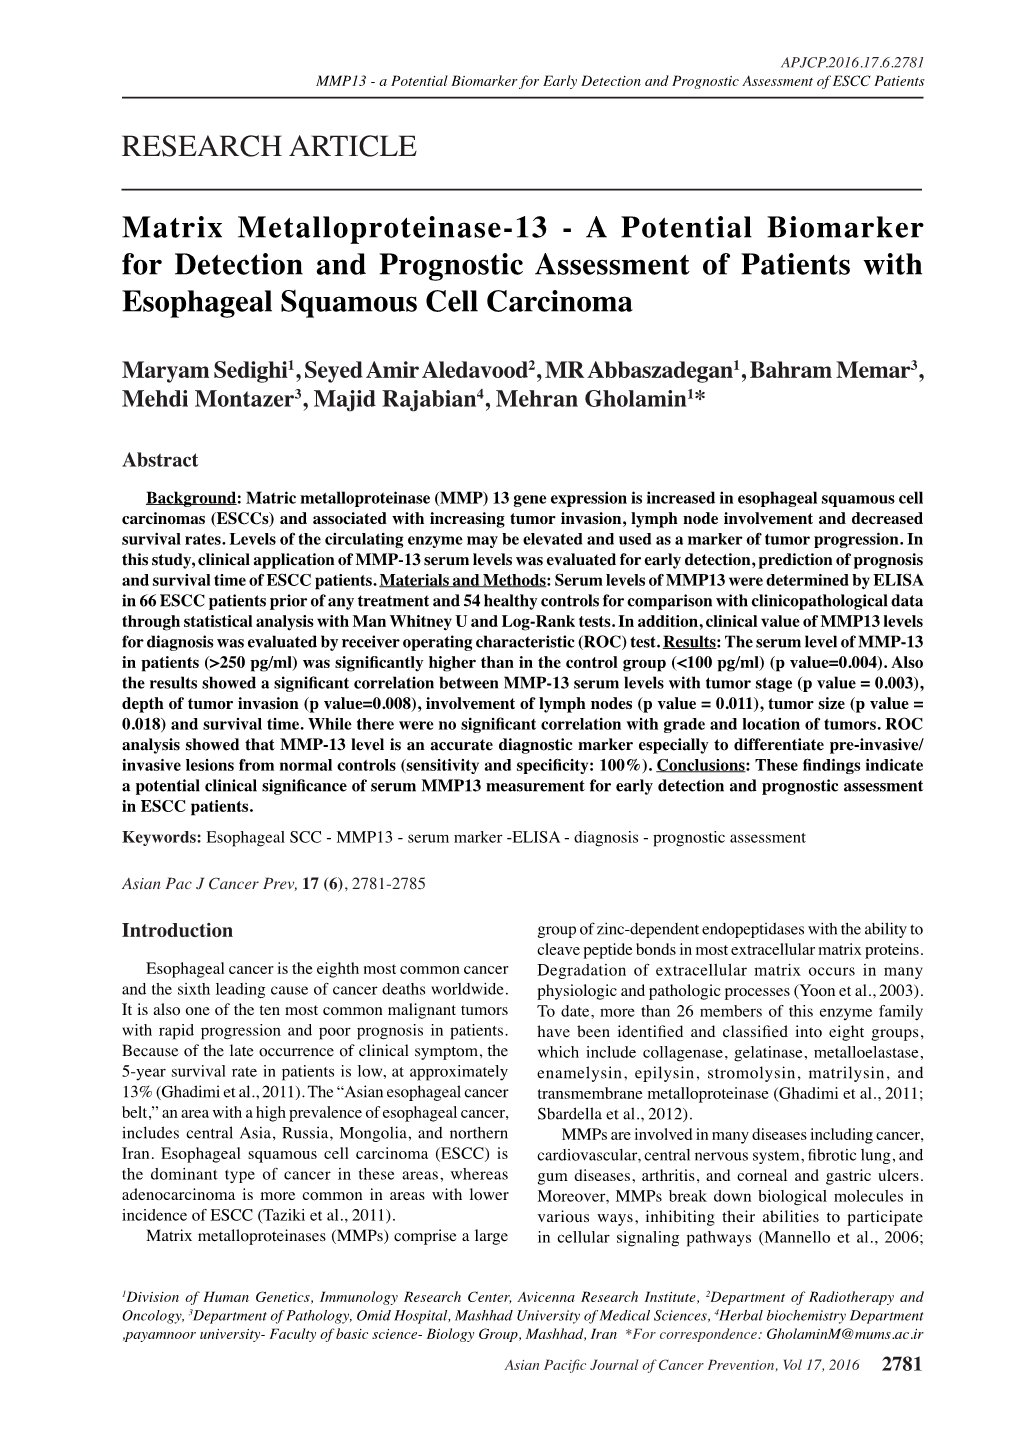 RESEARCH ARTICLE Matrix Metalloproteinase-13